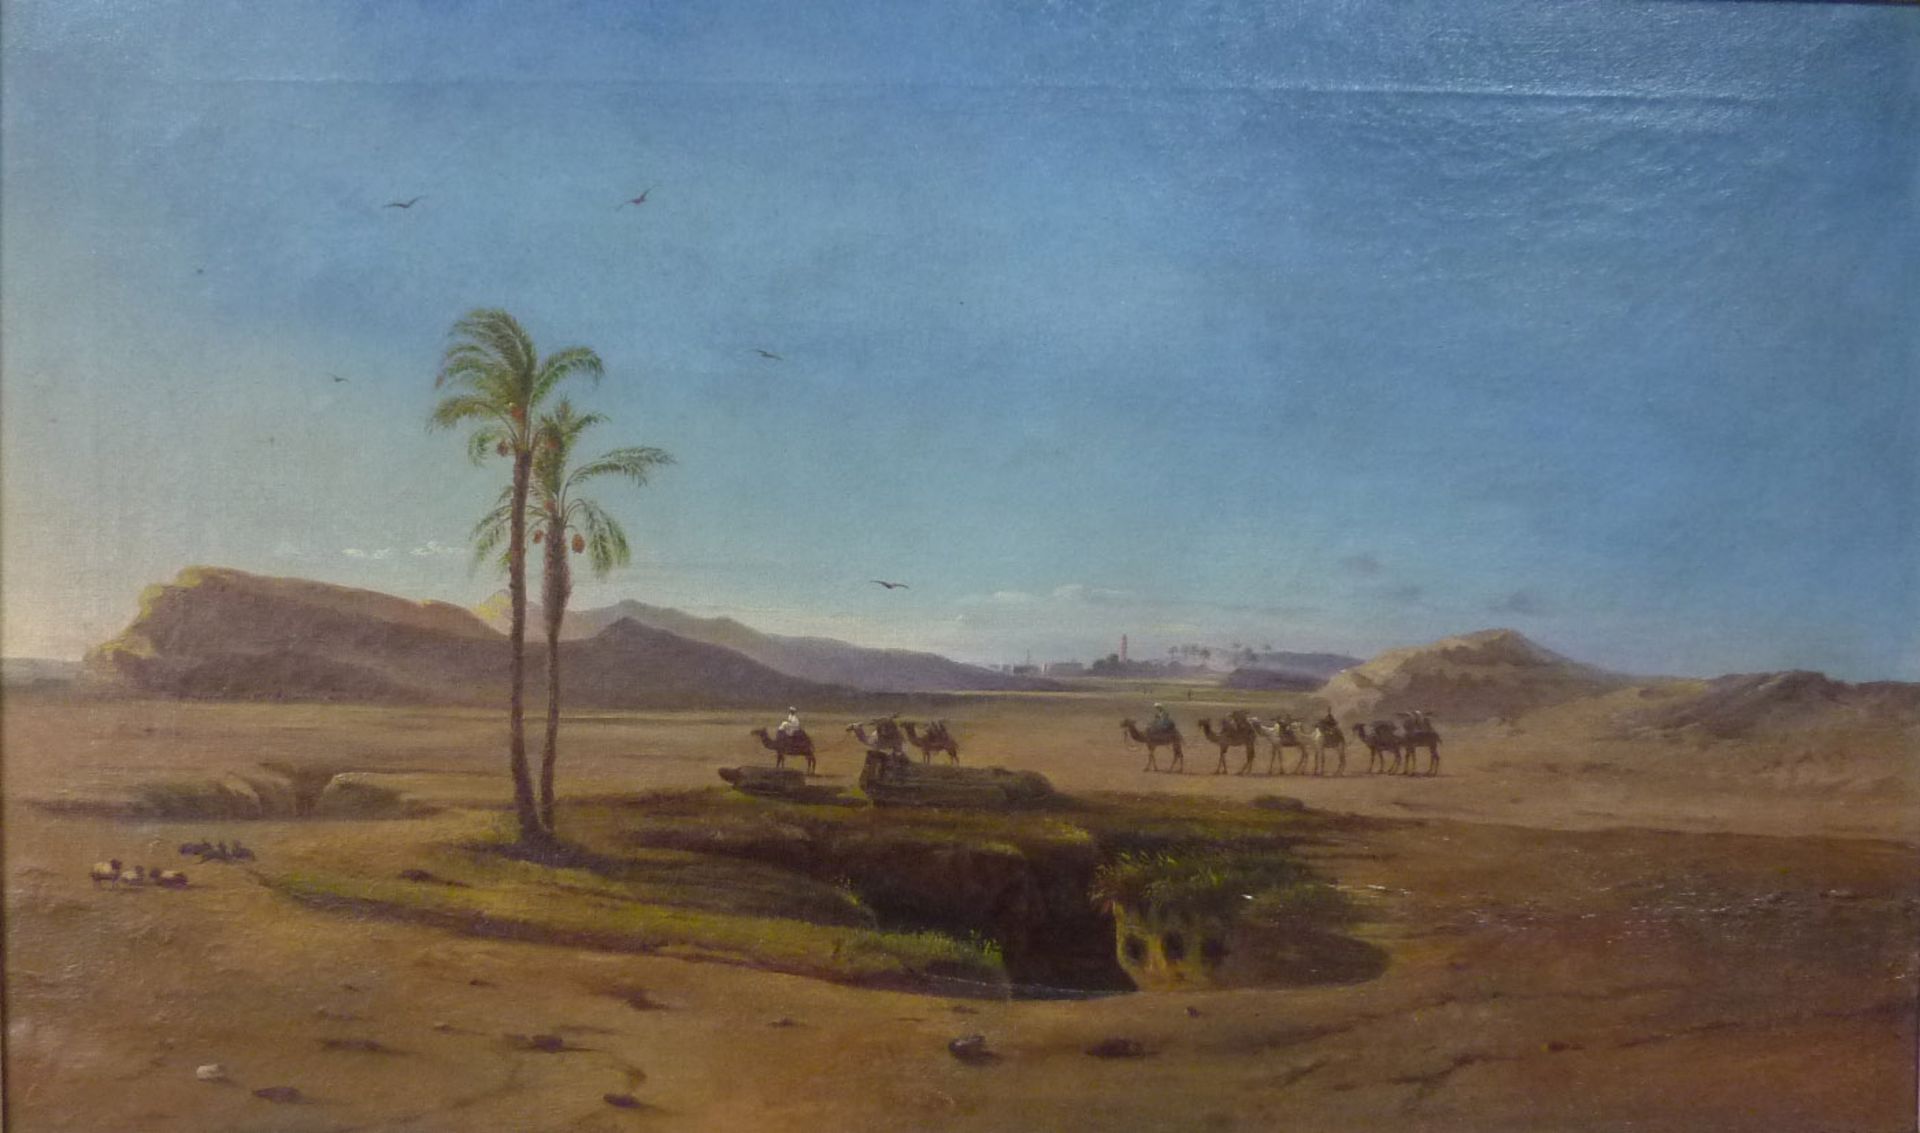 ORIENTALIST (XIX / XX). Caravan in the desert.45 cm x 74 cm. Painting. Oil on canvas. No signature